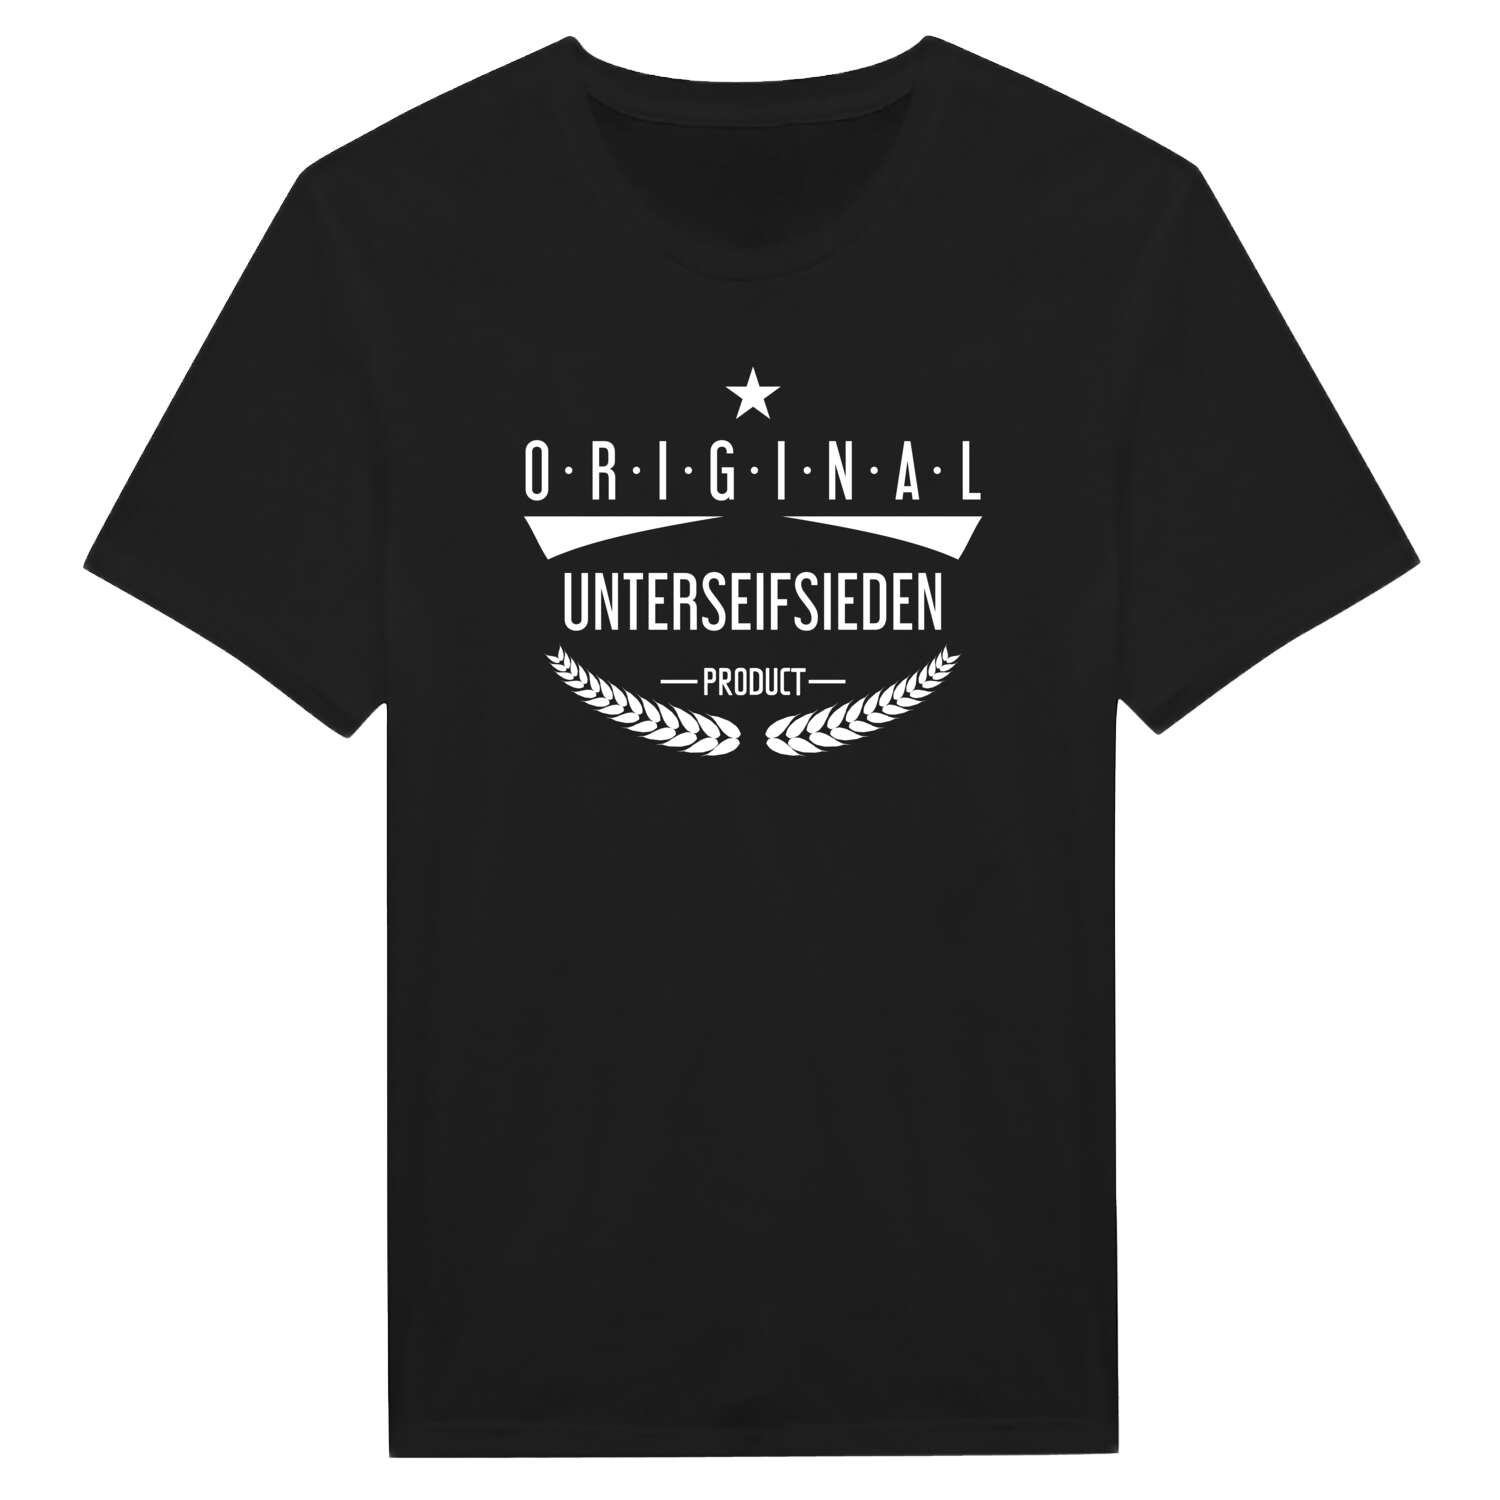 Unterseifsieden T-Shirt »Original Product«